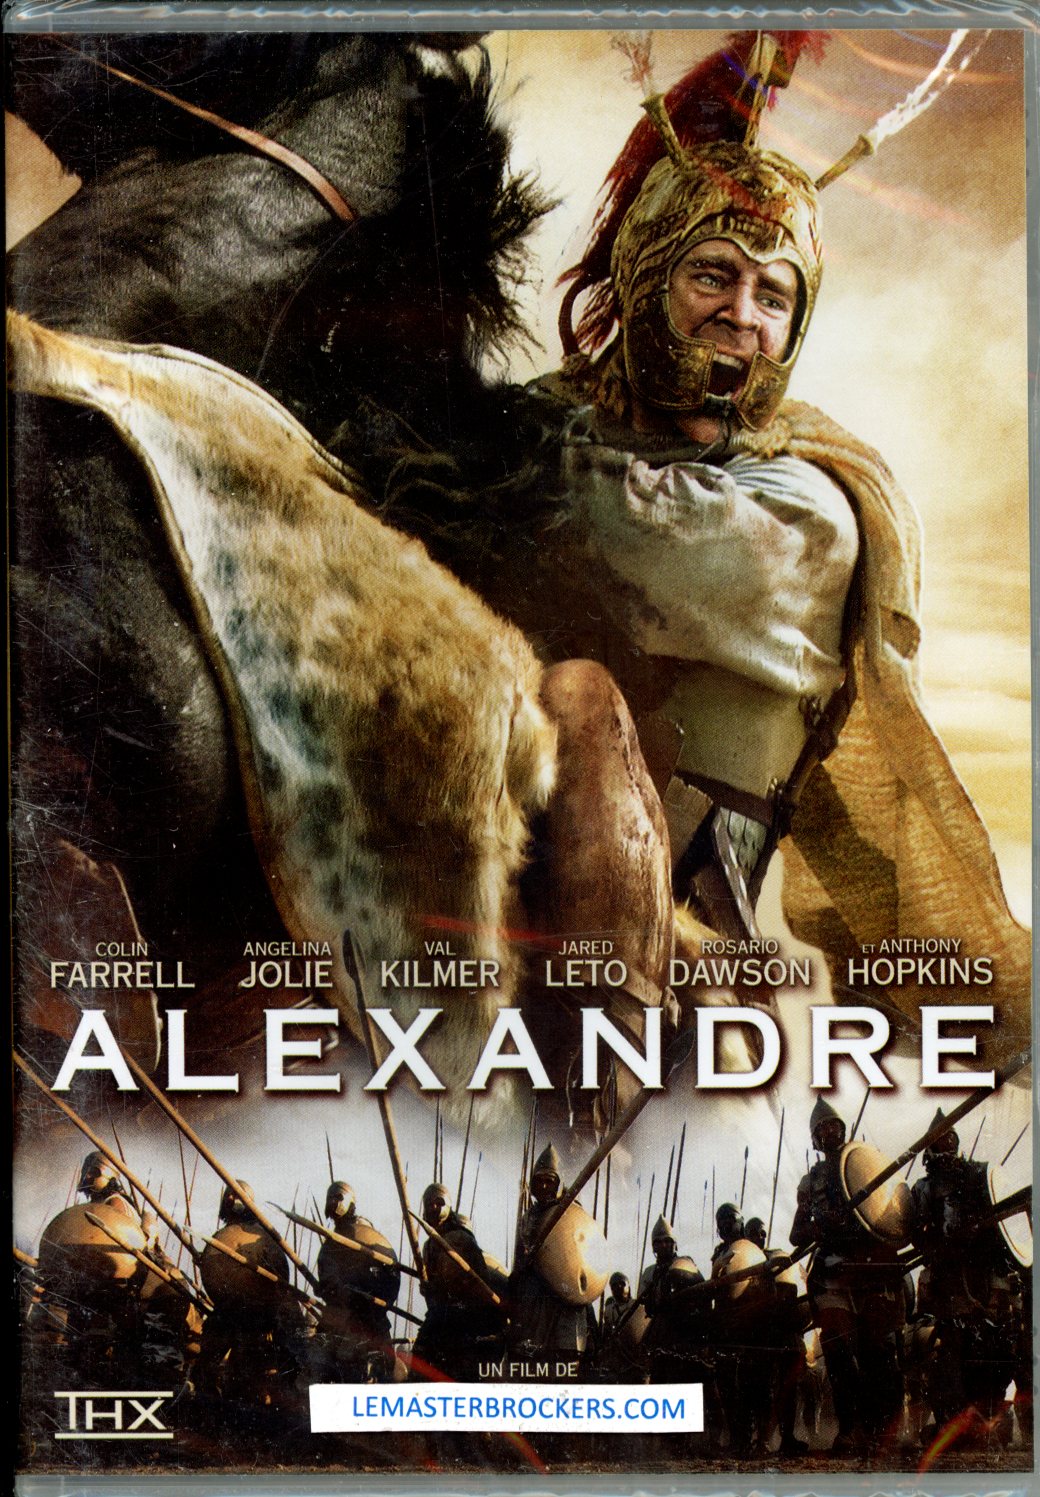 ALEXANDRE UN FILM DE OLIVIER STONE DVD NEUF 3388334570015